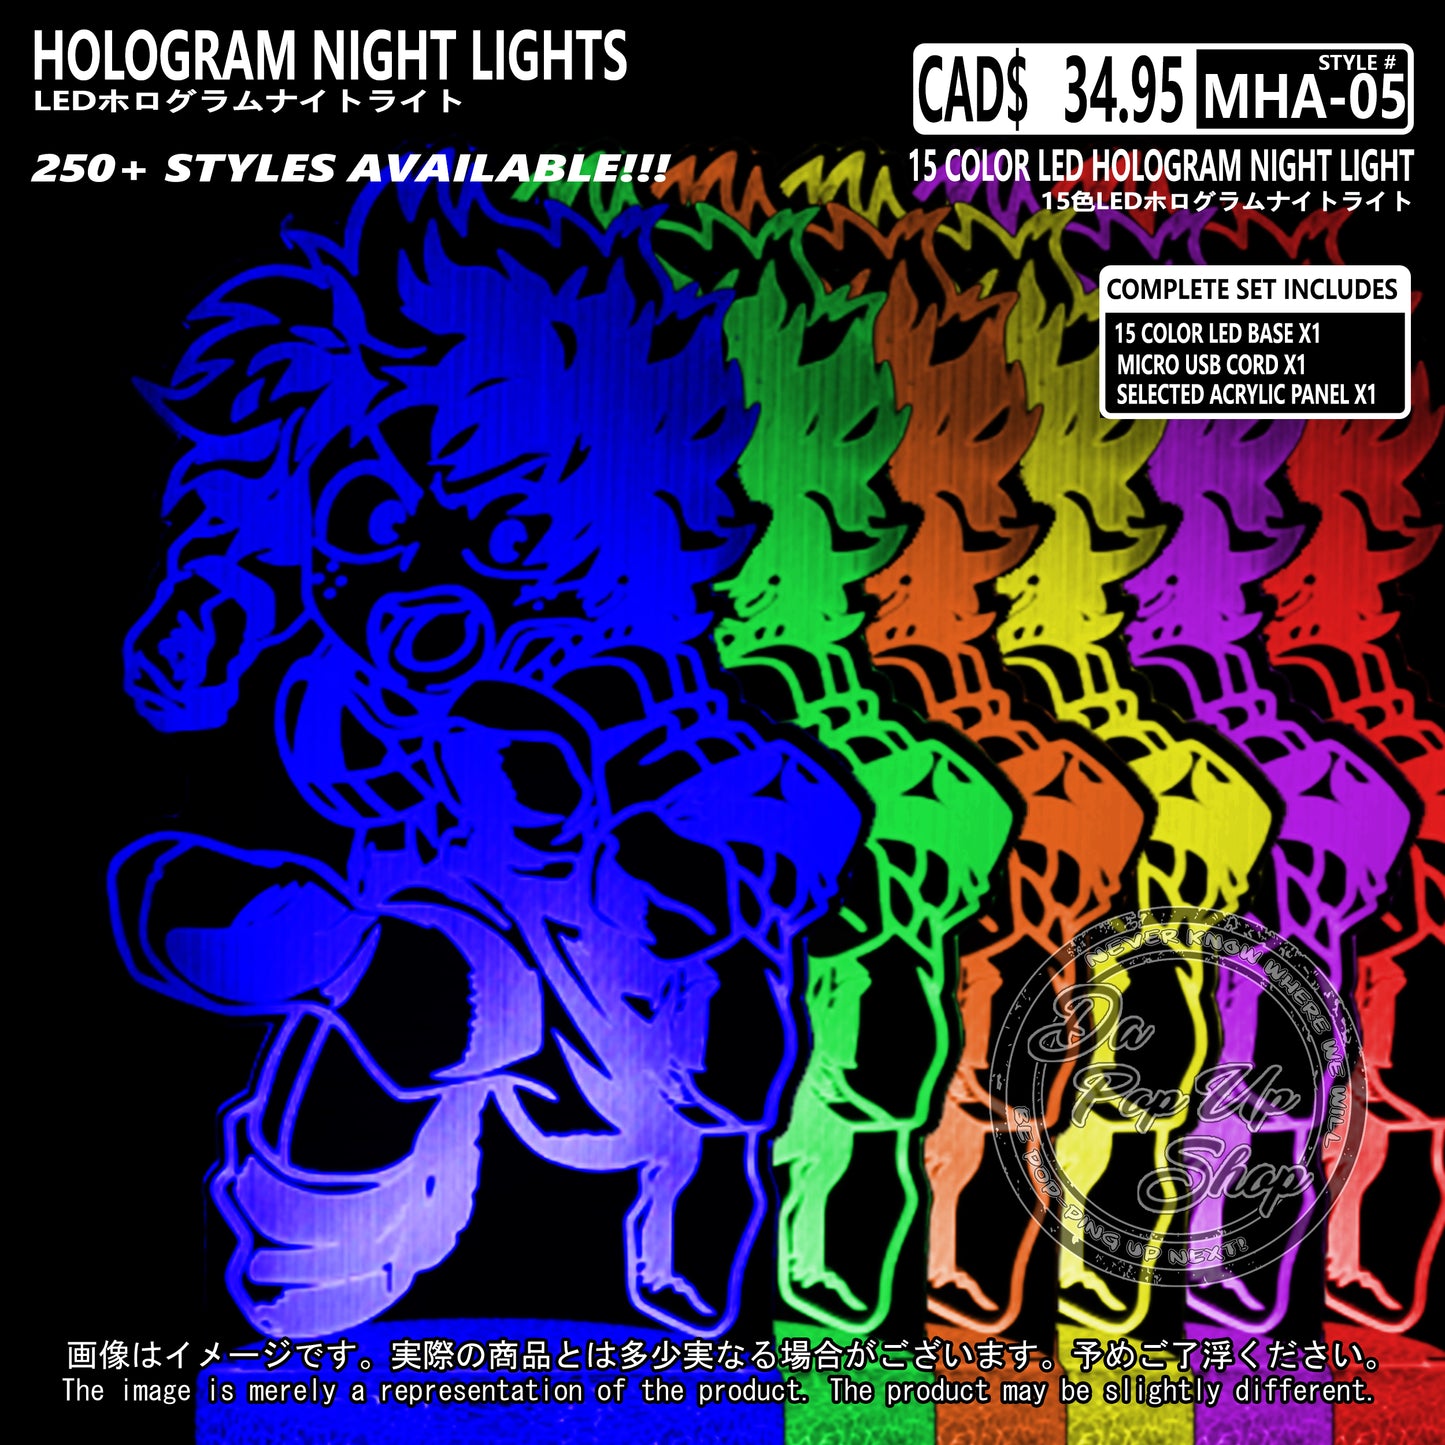 (MHA-05) My Hero Academia Hologram LED Night Light